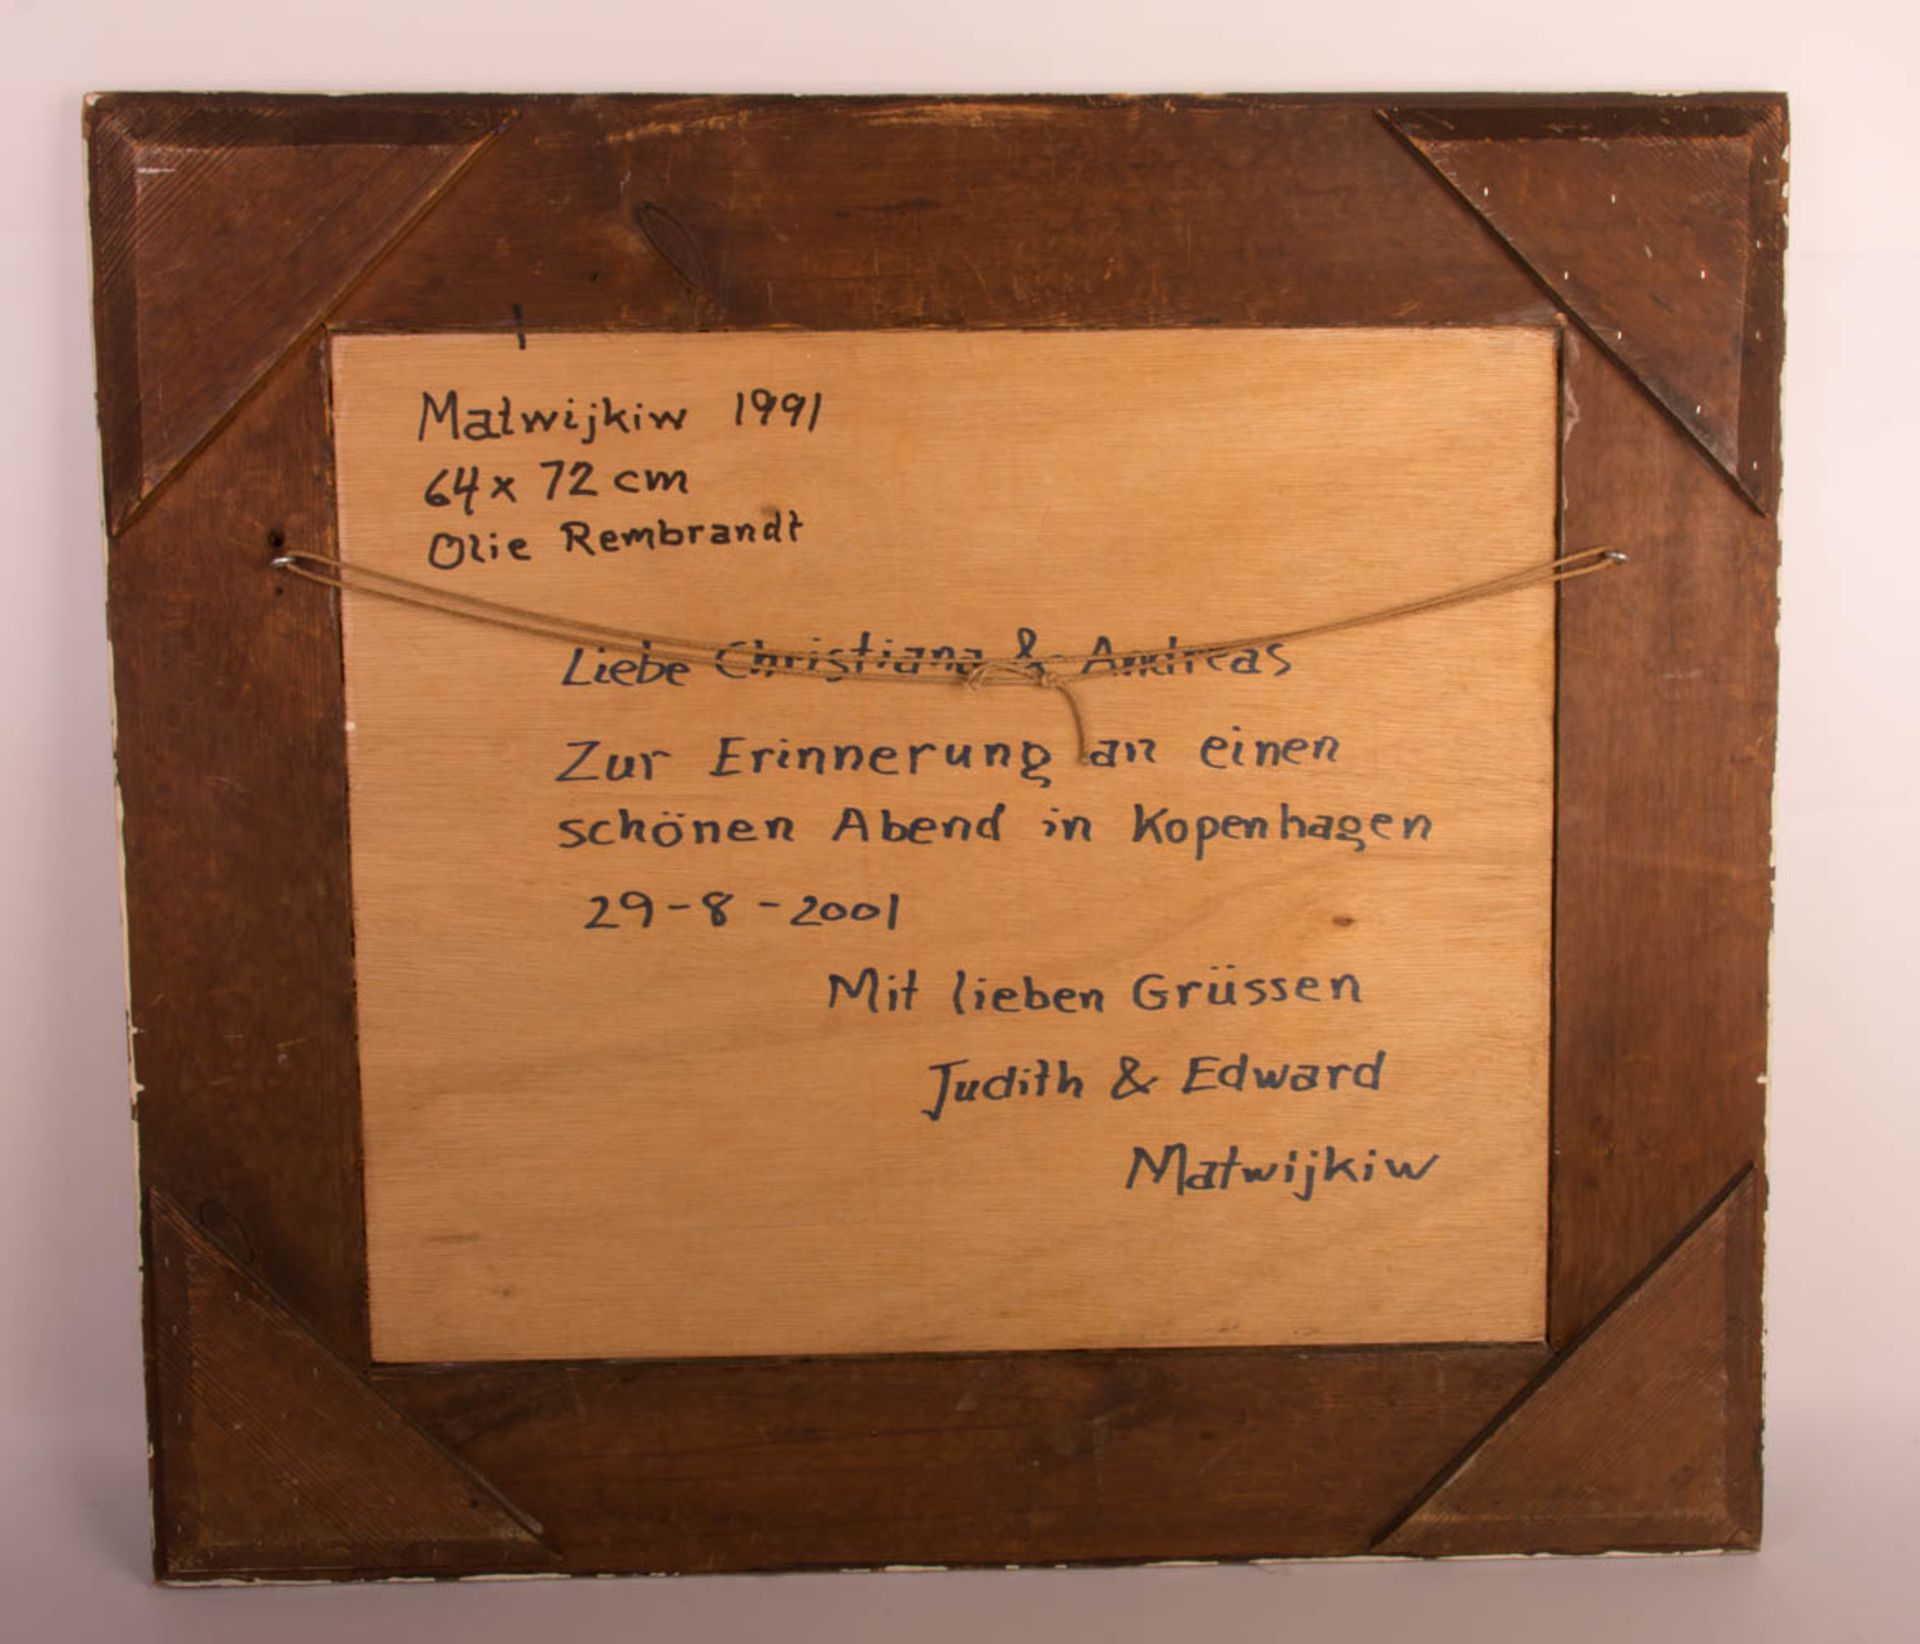 Edward Matwijkiw, Olie Rembrandt, Acryl auf Holz, 1991. - Bild 6 aus 8